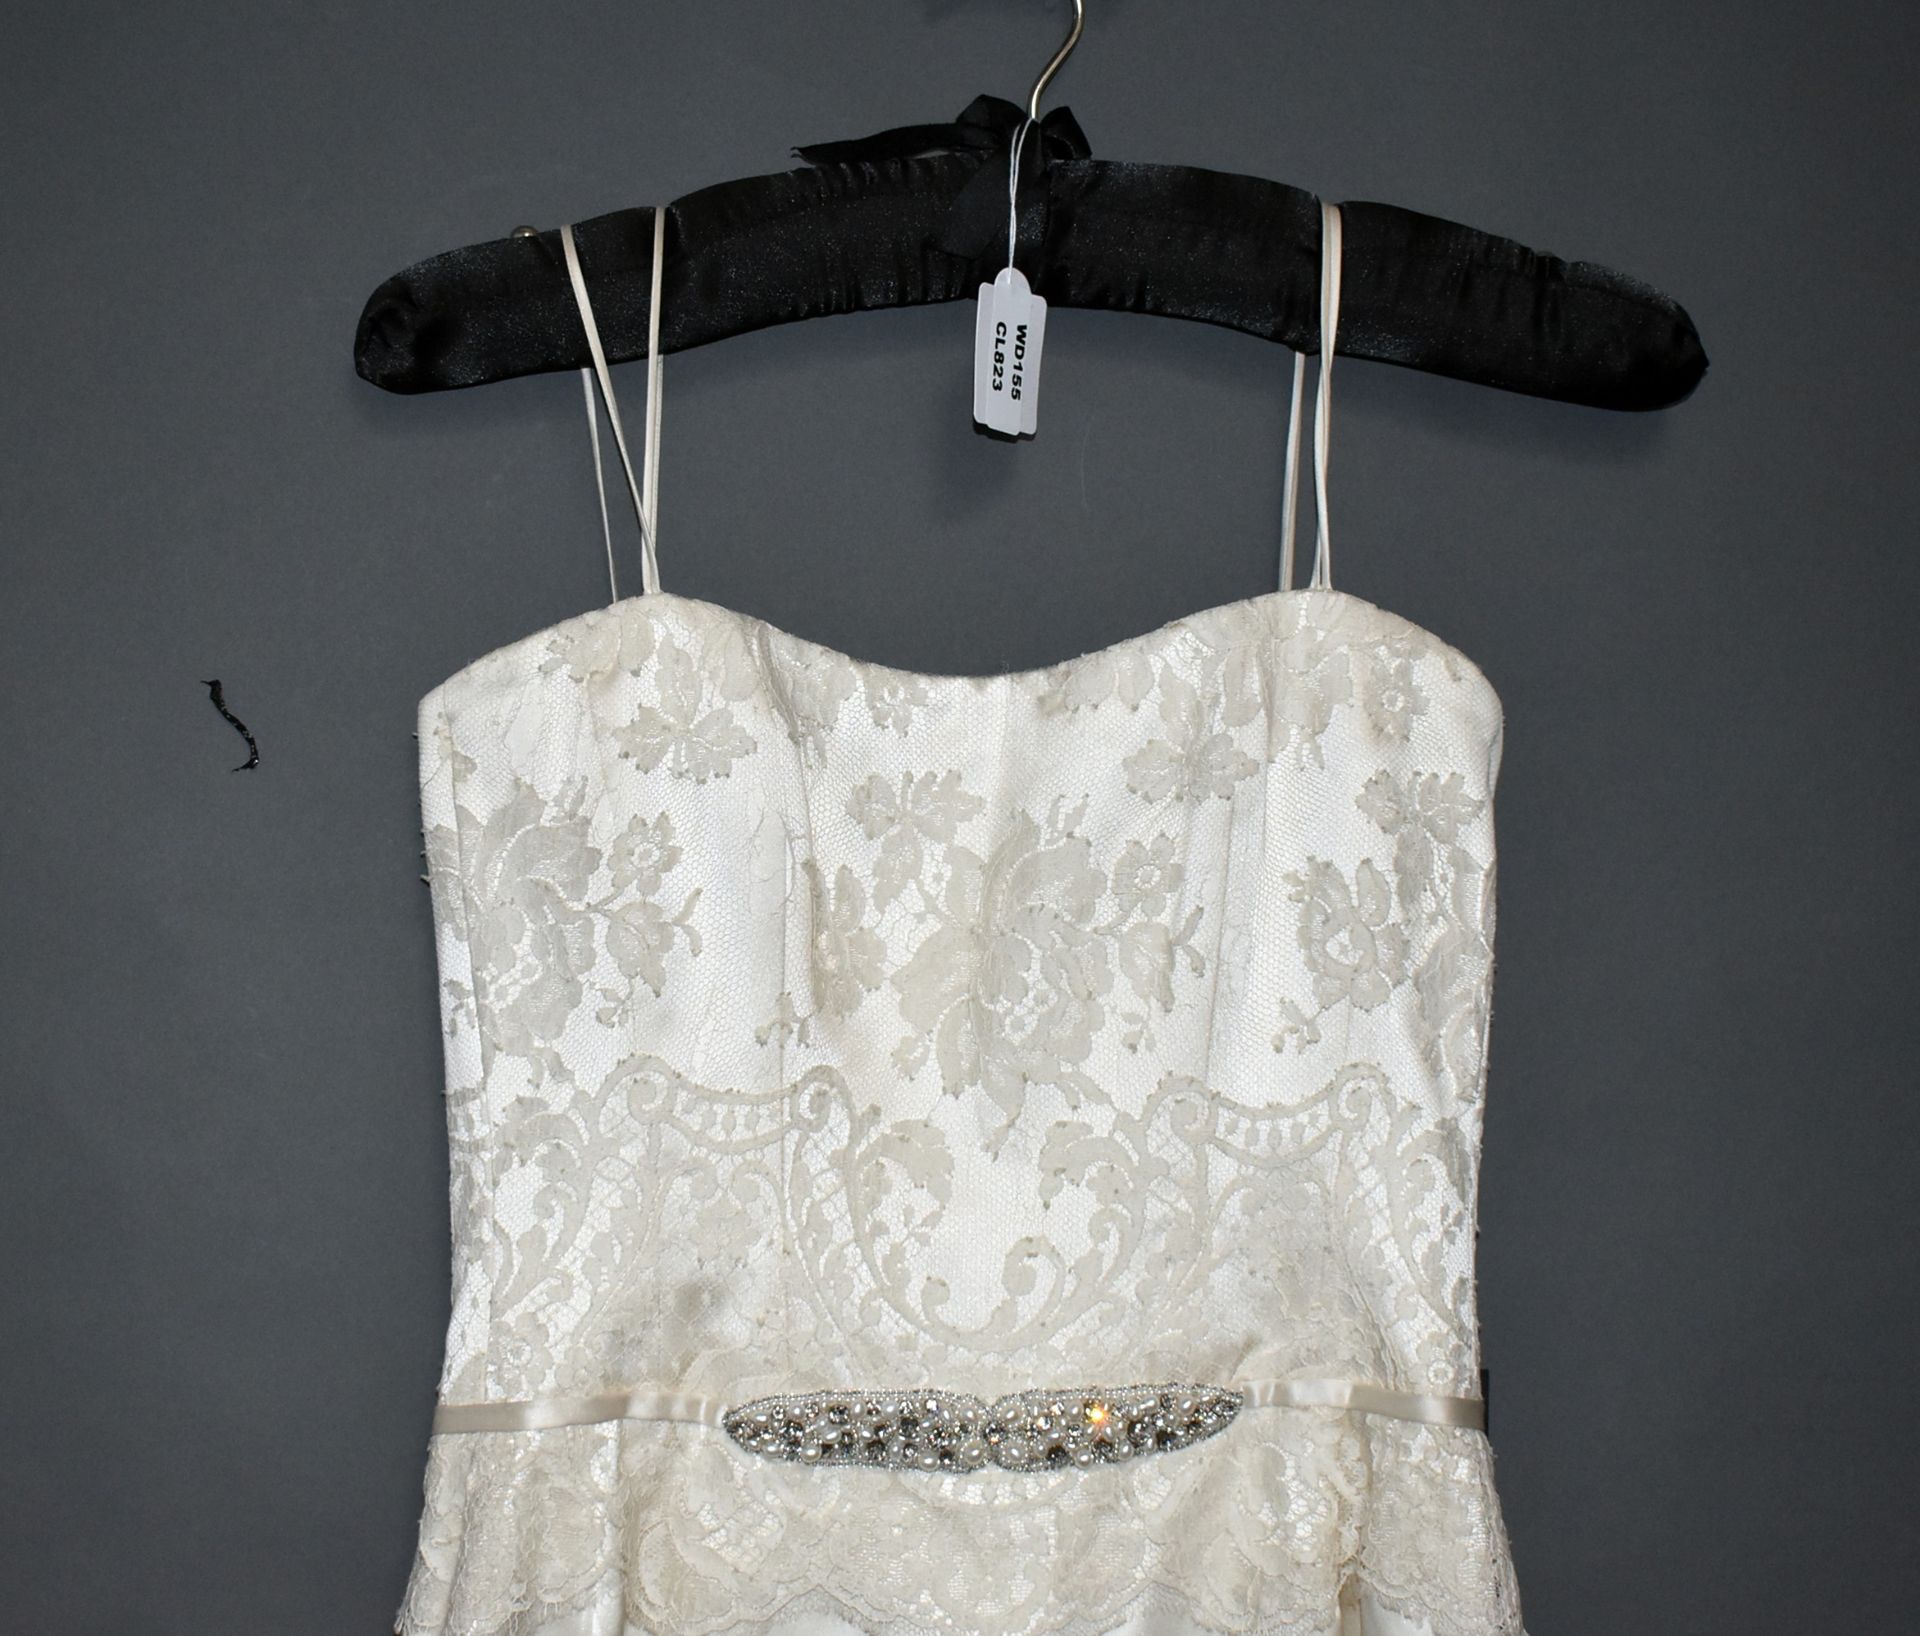 1 x ALAN HANNAH Strapless Lace Bodice Fishtail Designer Wedding Dress Bridal Gown RRP £1,900 UK12 - Image 2 of 6